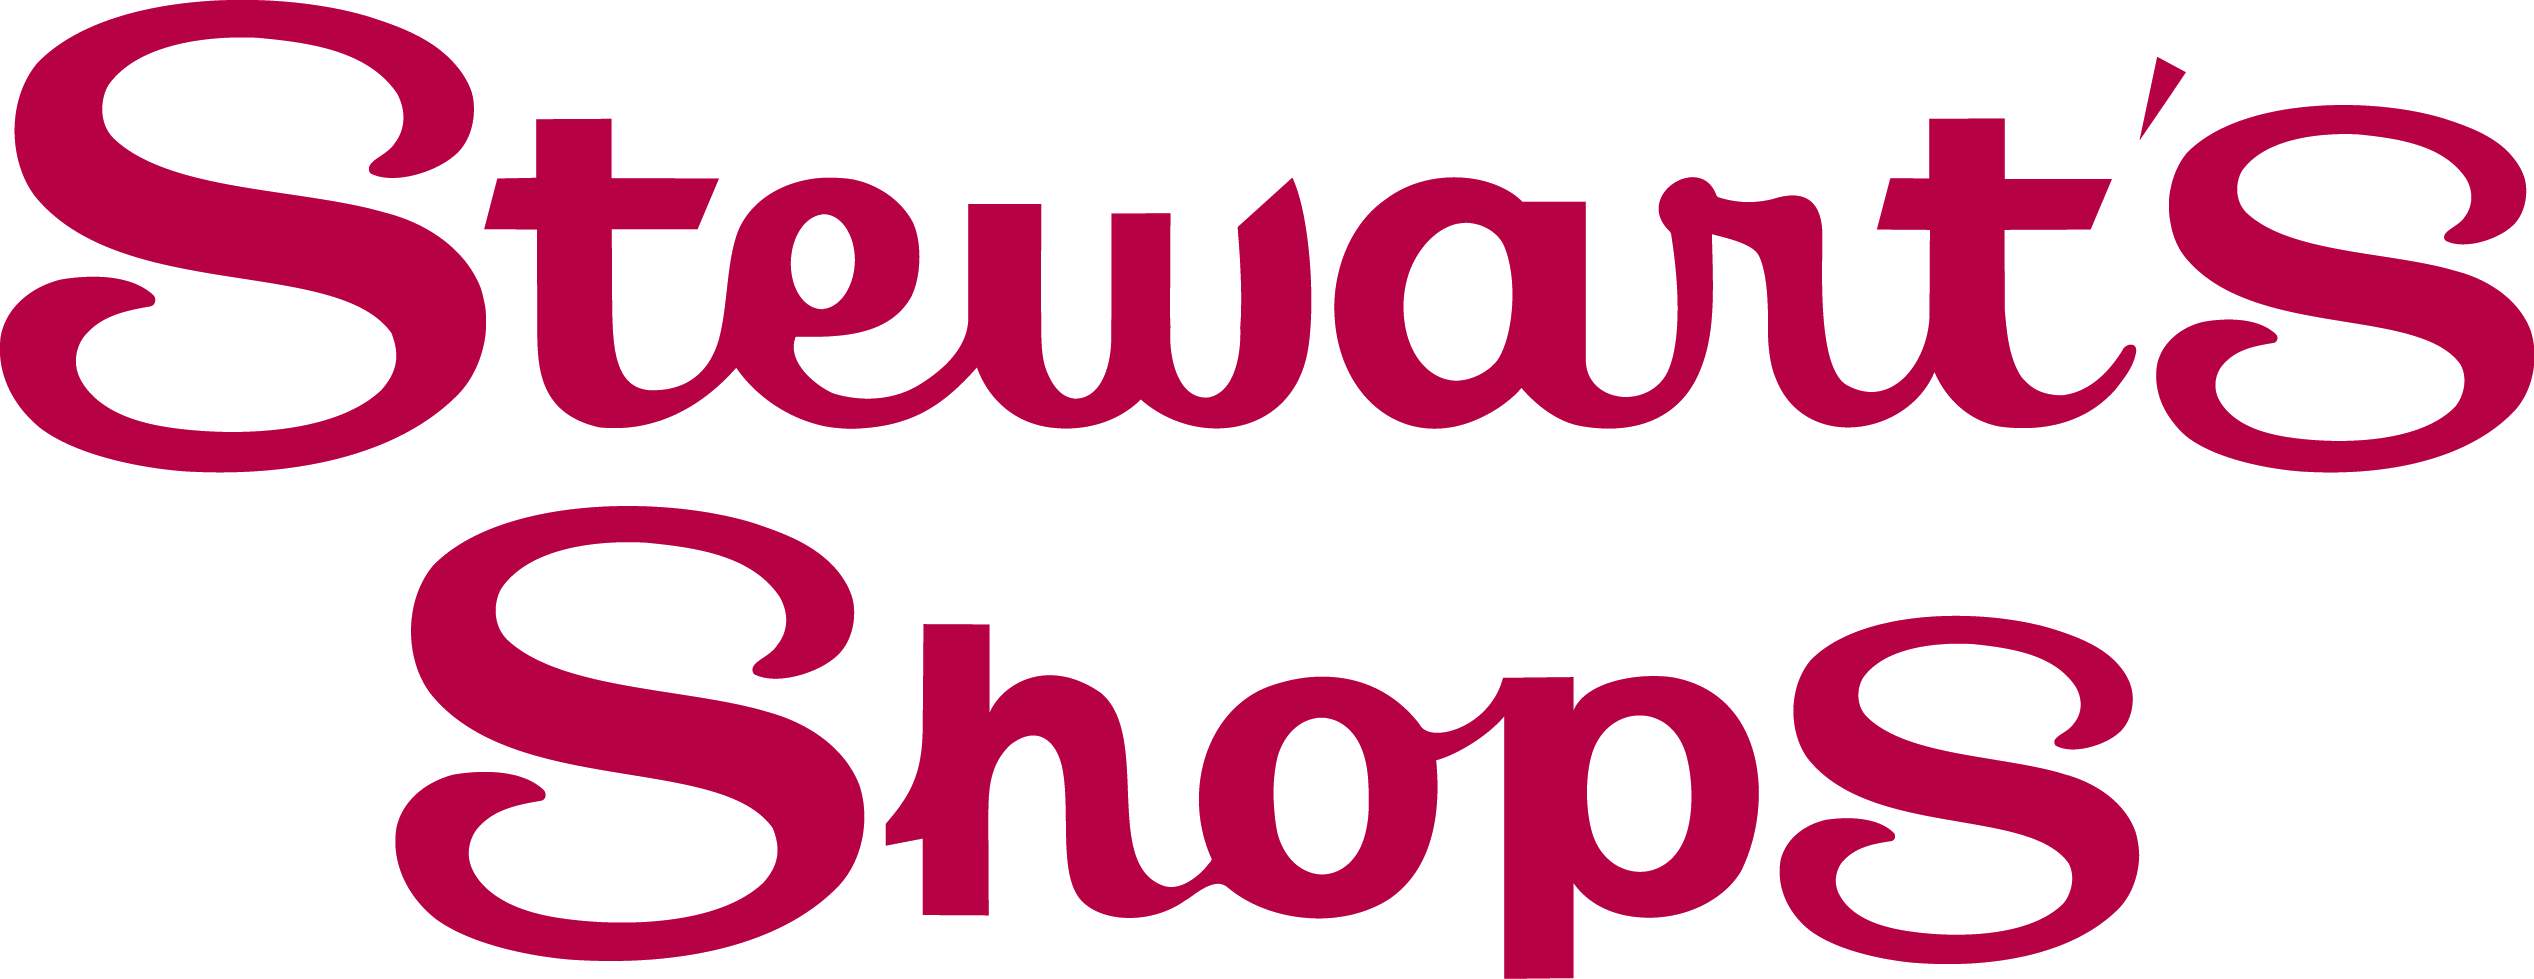 stewarts shops sign